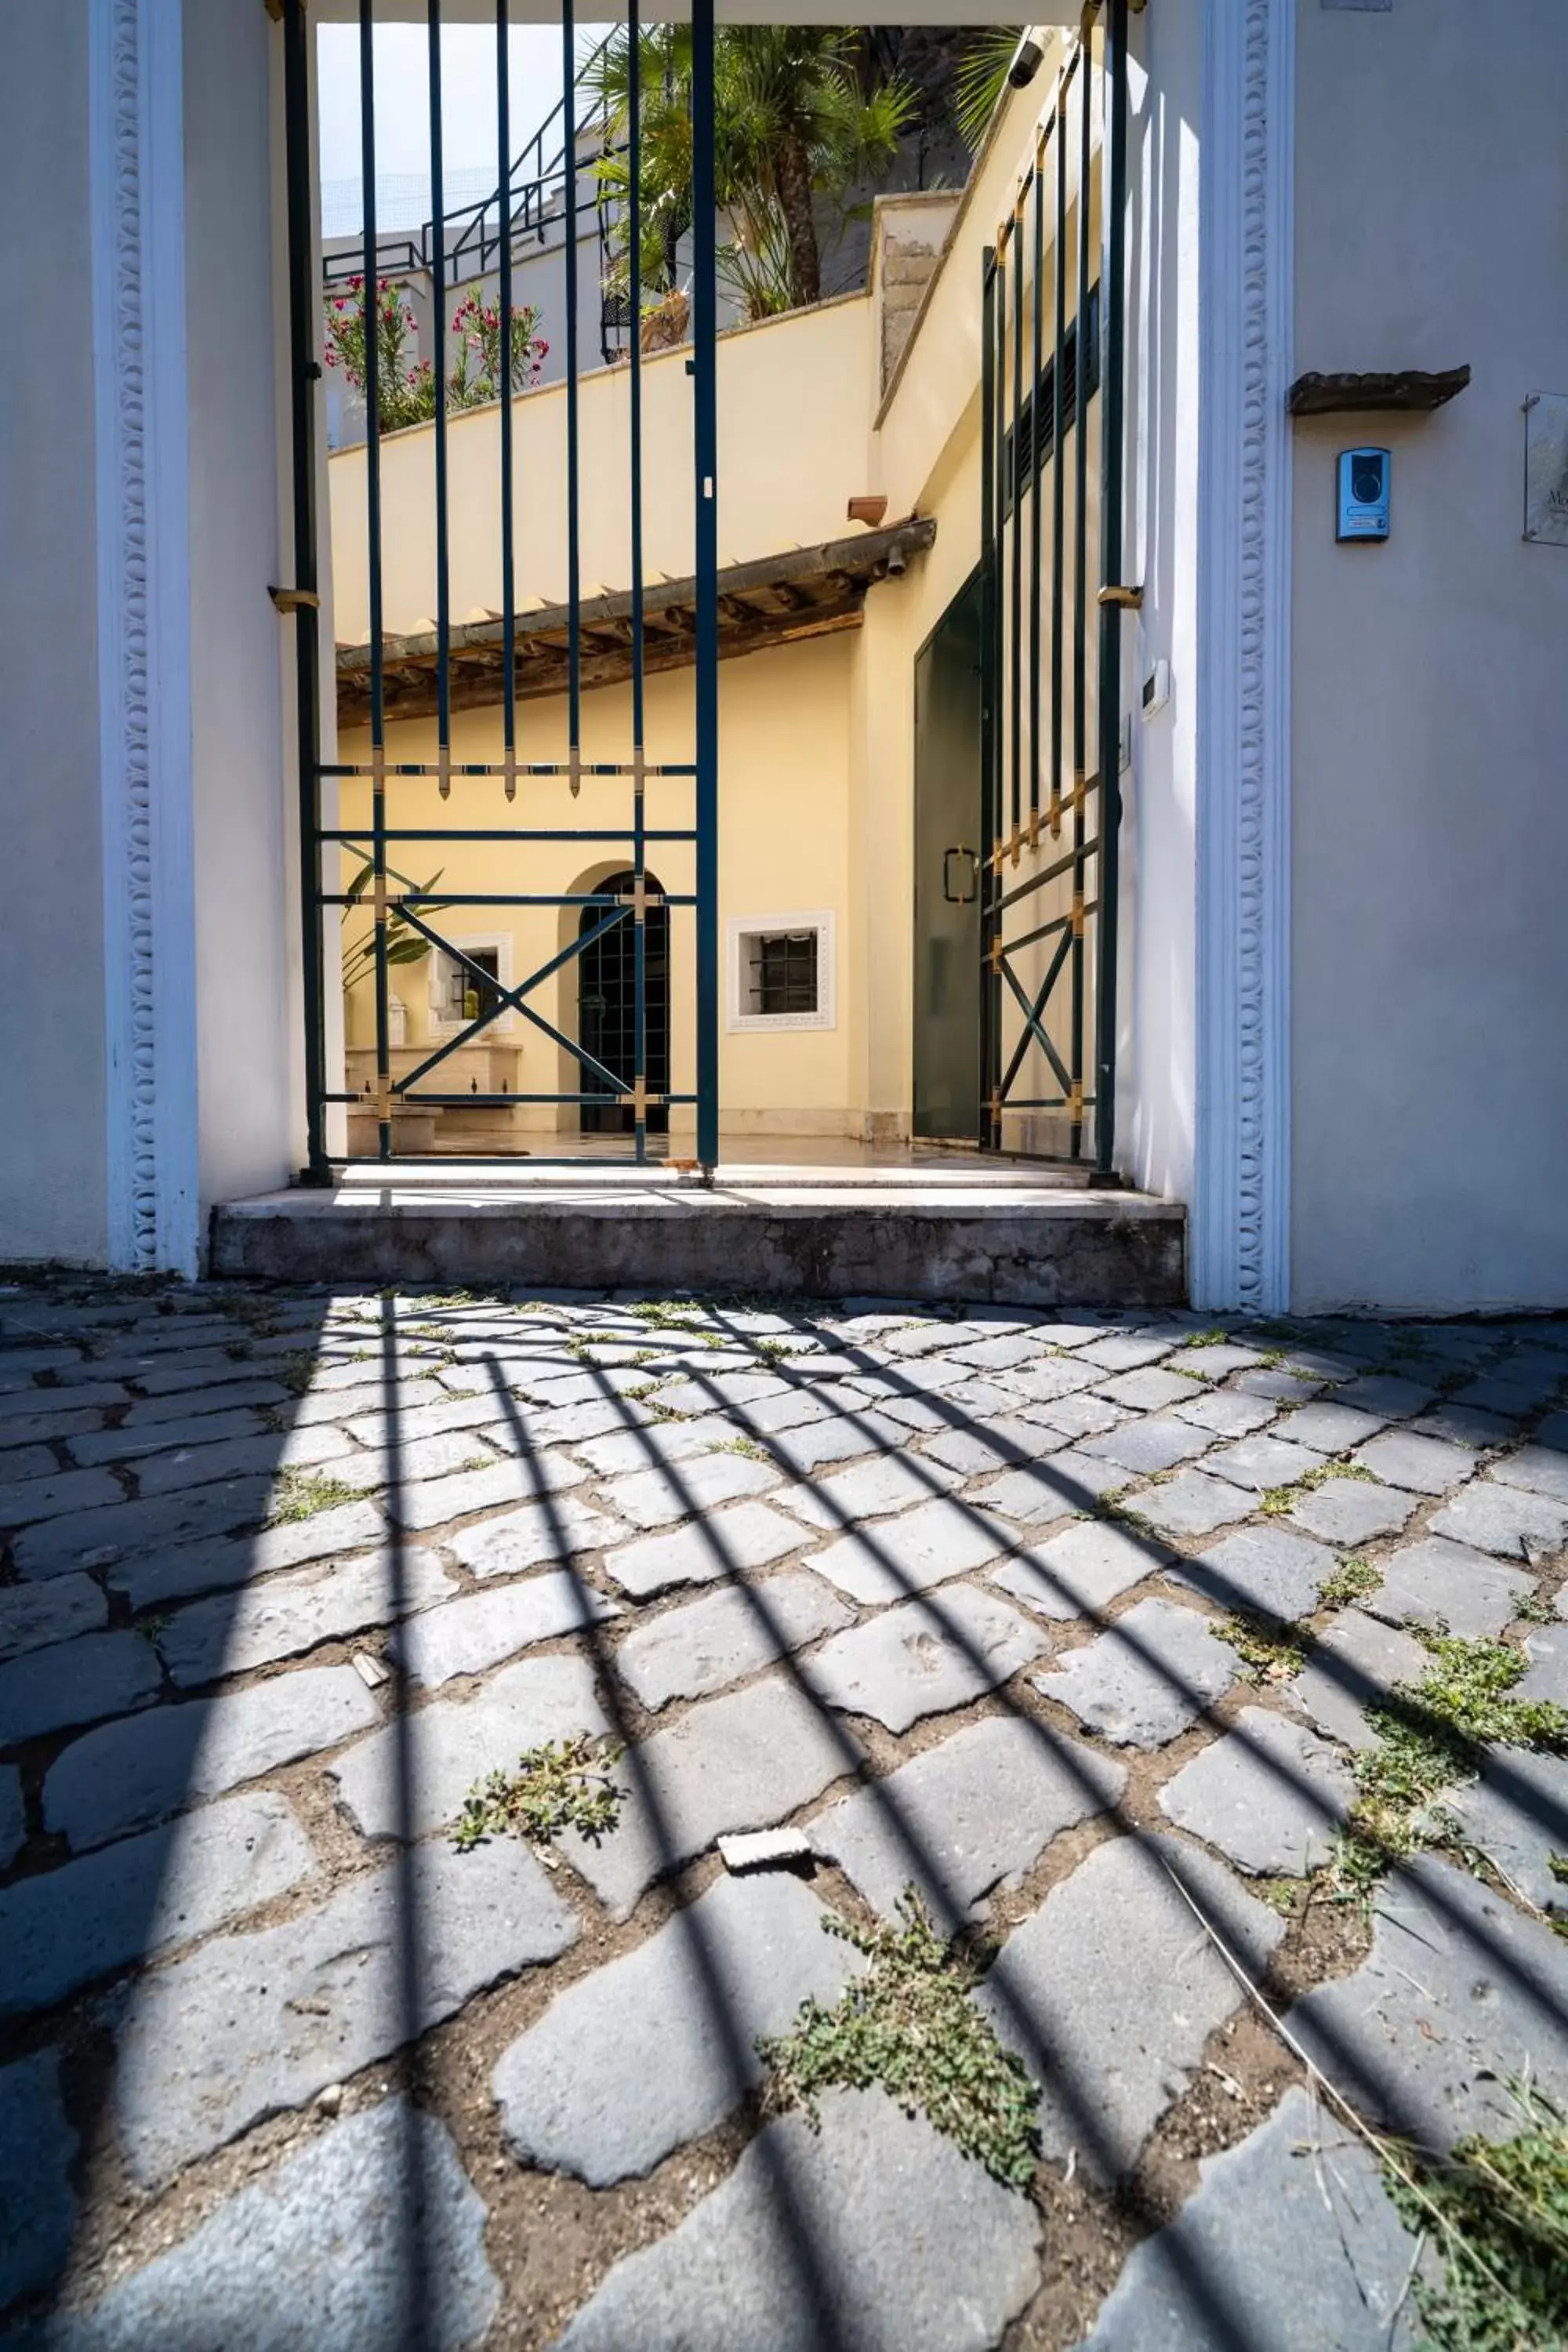 Facade/entrance in Monastero dei Santi